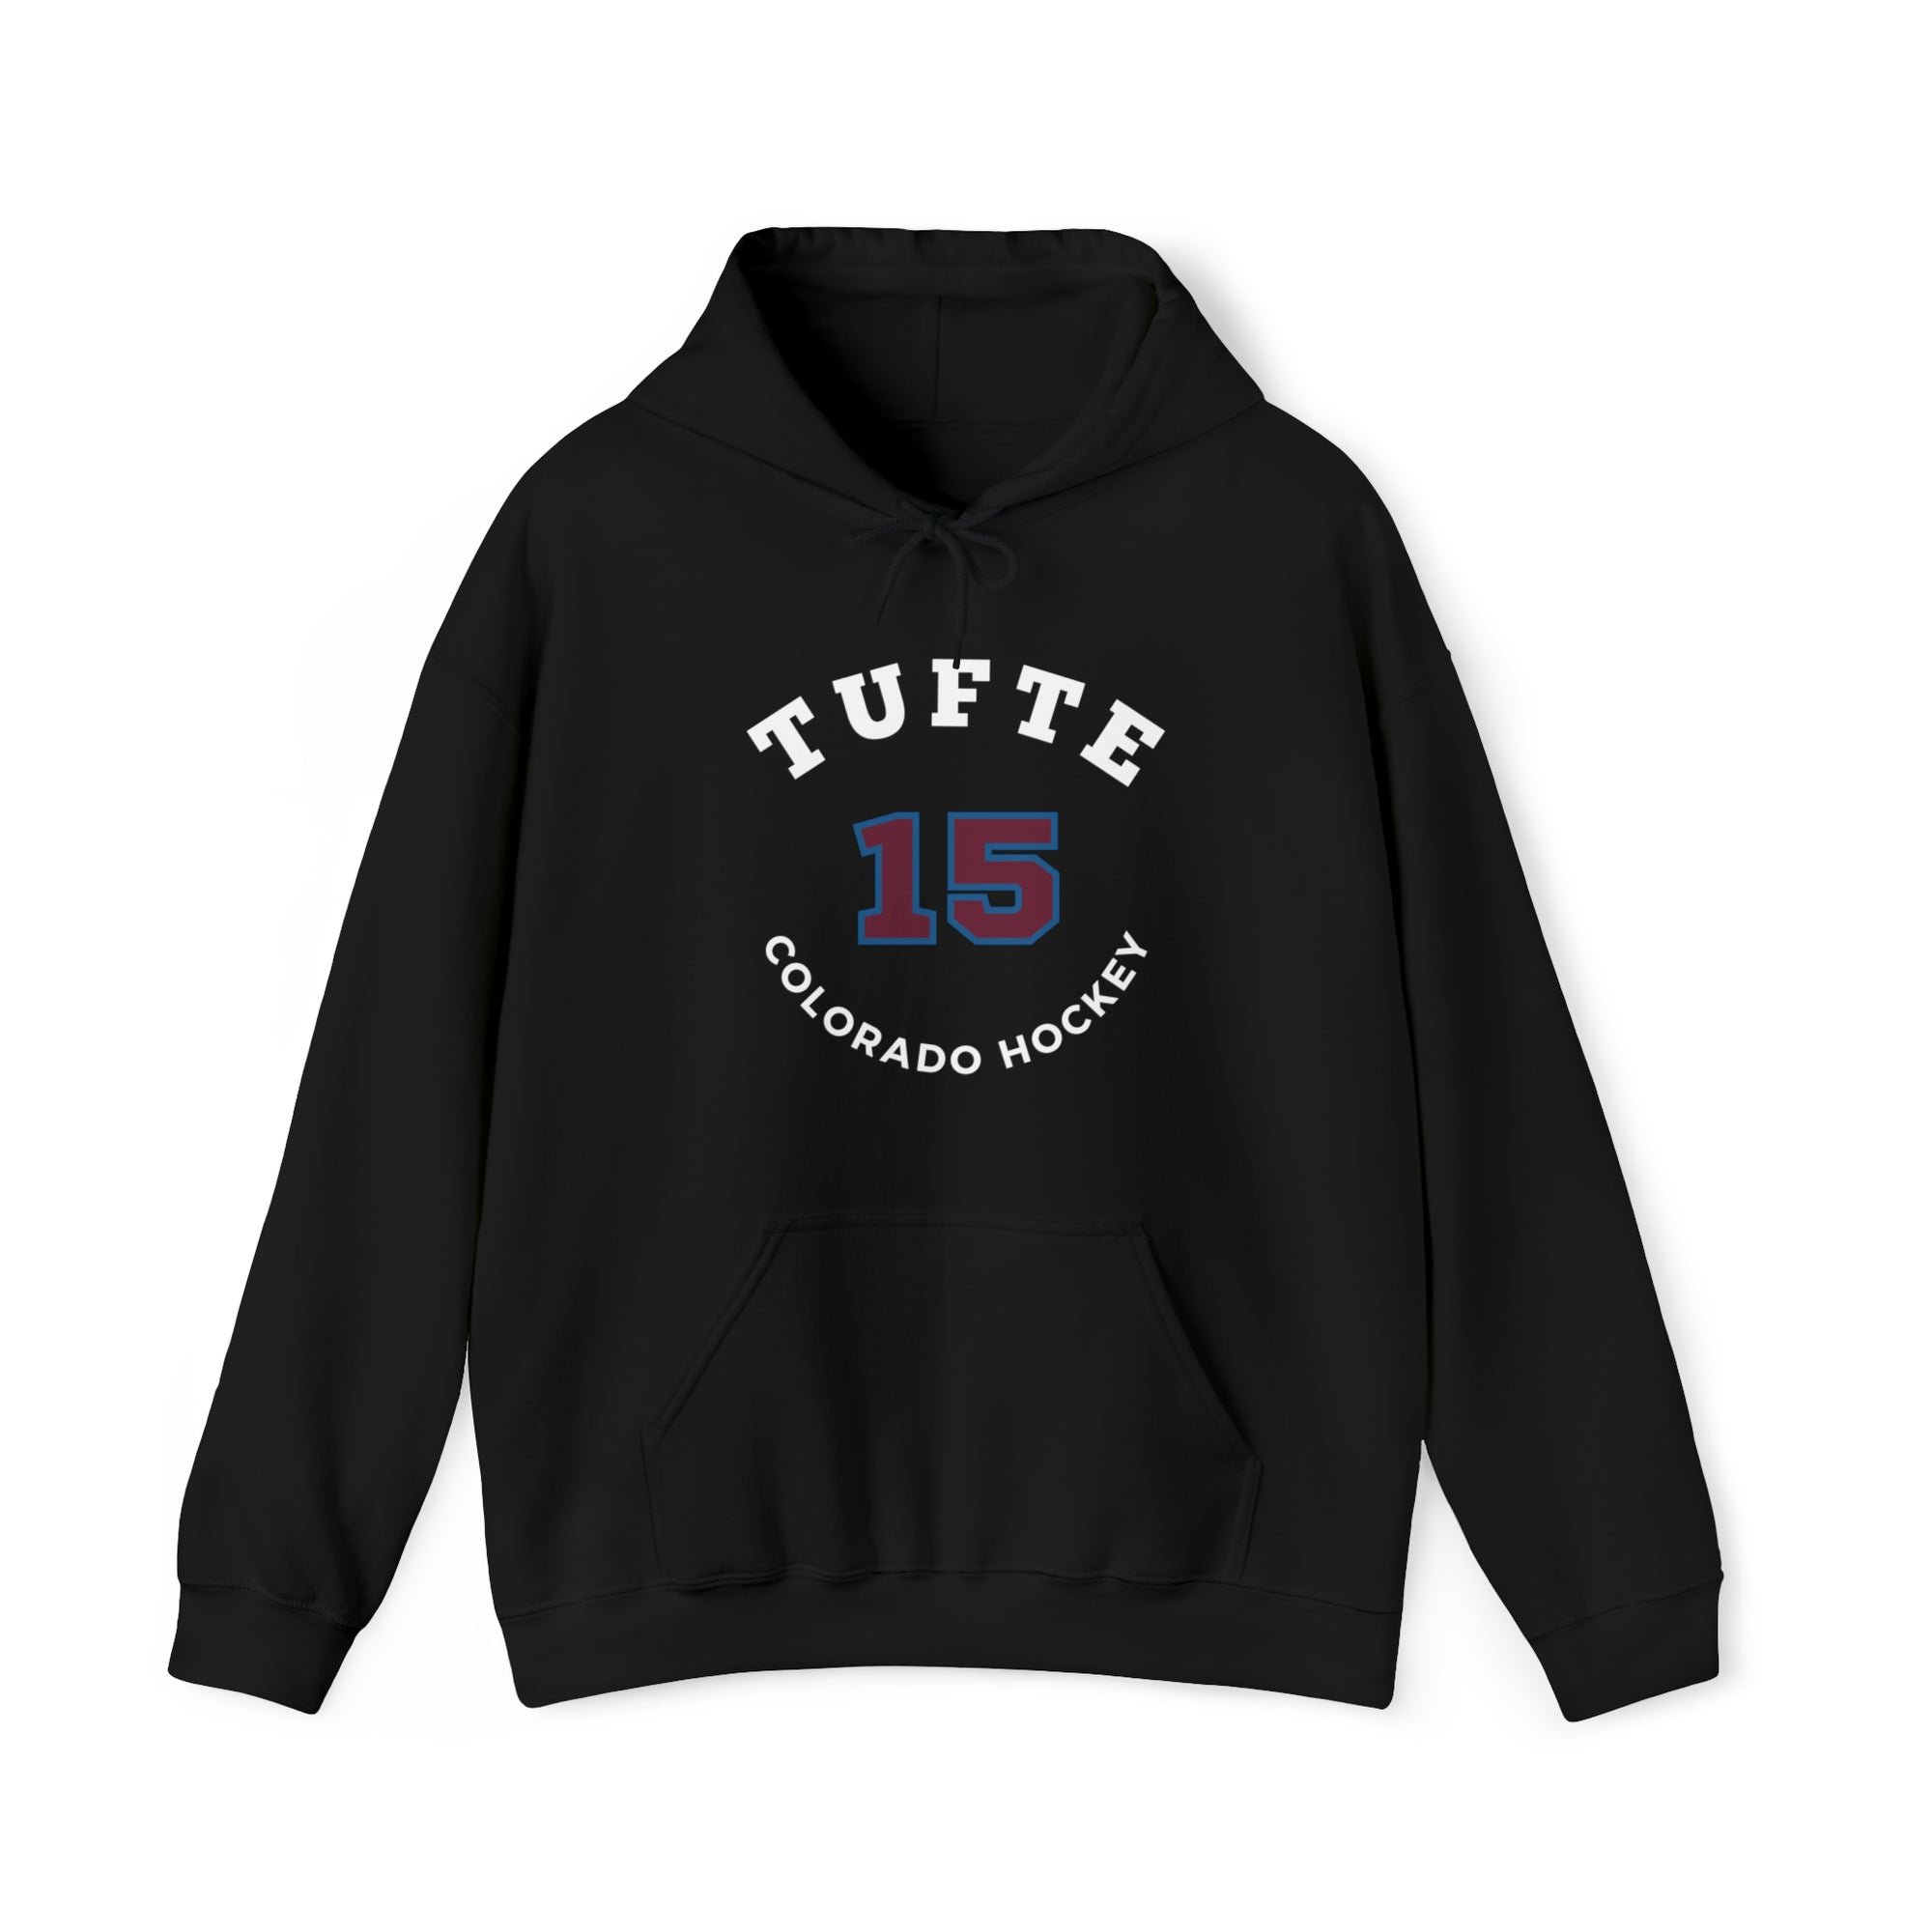 Tufte 15 Colorado Hockey Number Arch Design Unisex Hooded Sweatshirt